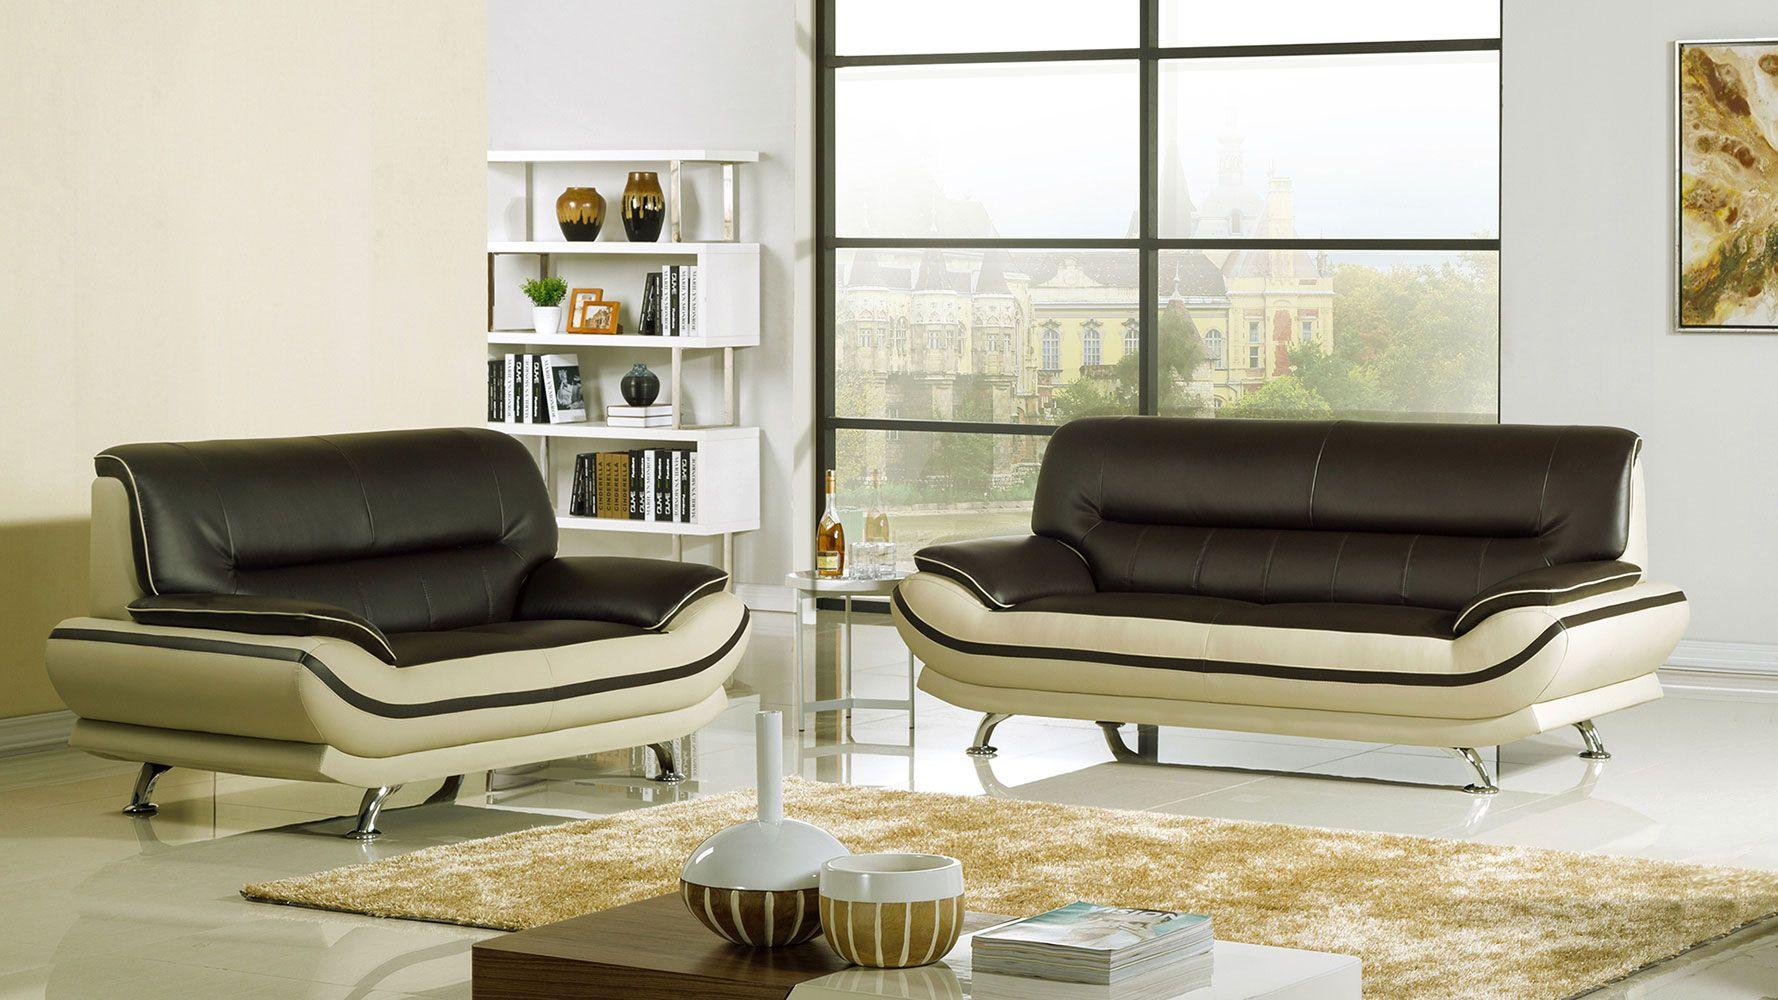 Contemporary, Modern Sofa Set AE709-MA.LG AE709-MA.LG-2PC in Light Gray, Mahogany Bonded Leather